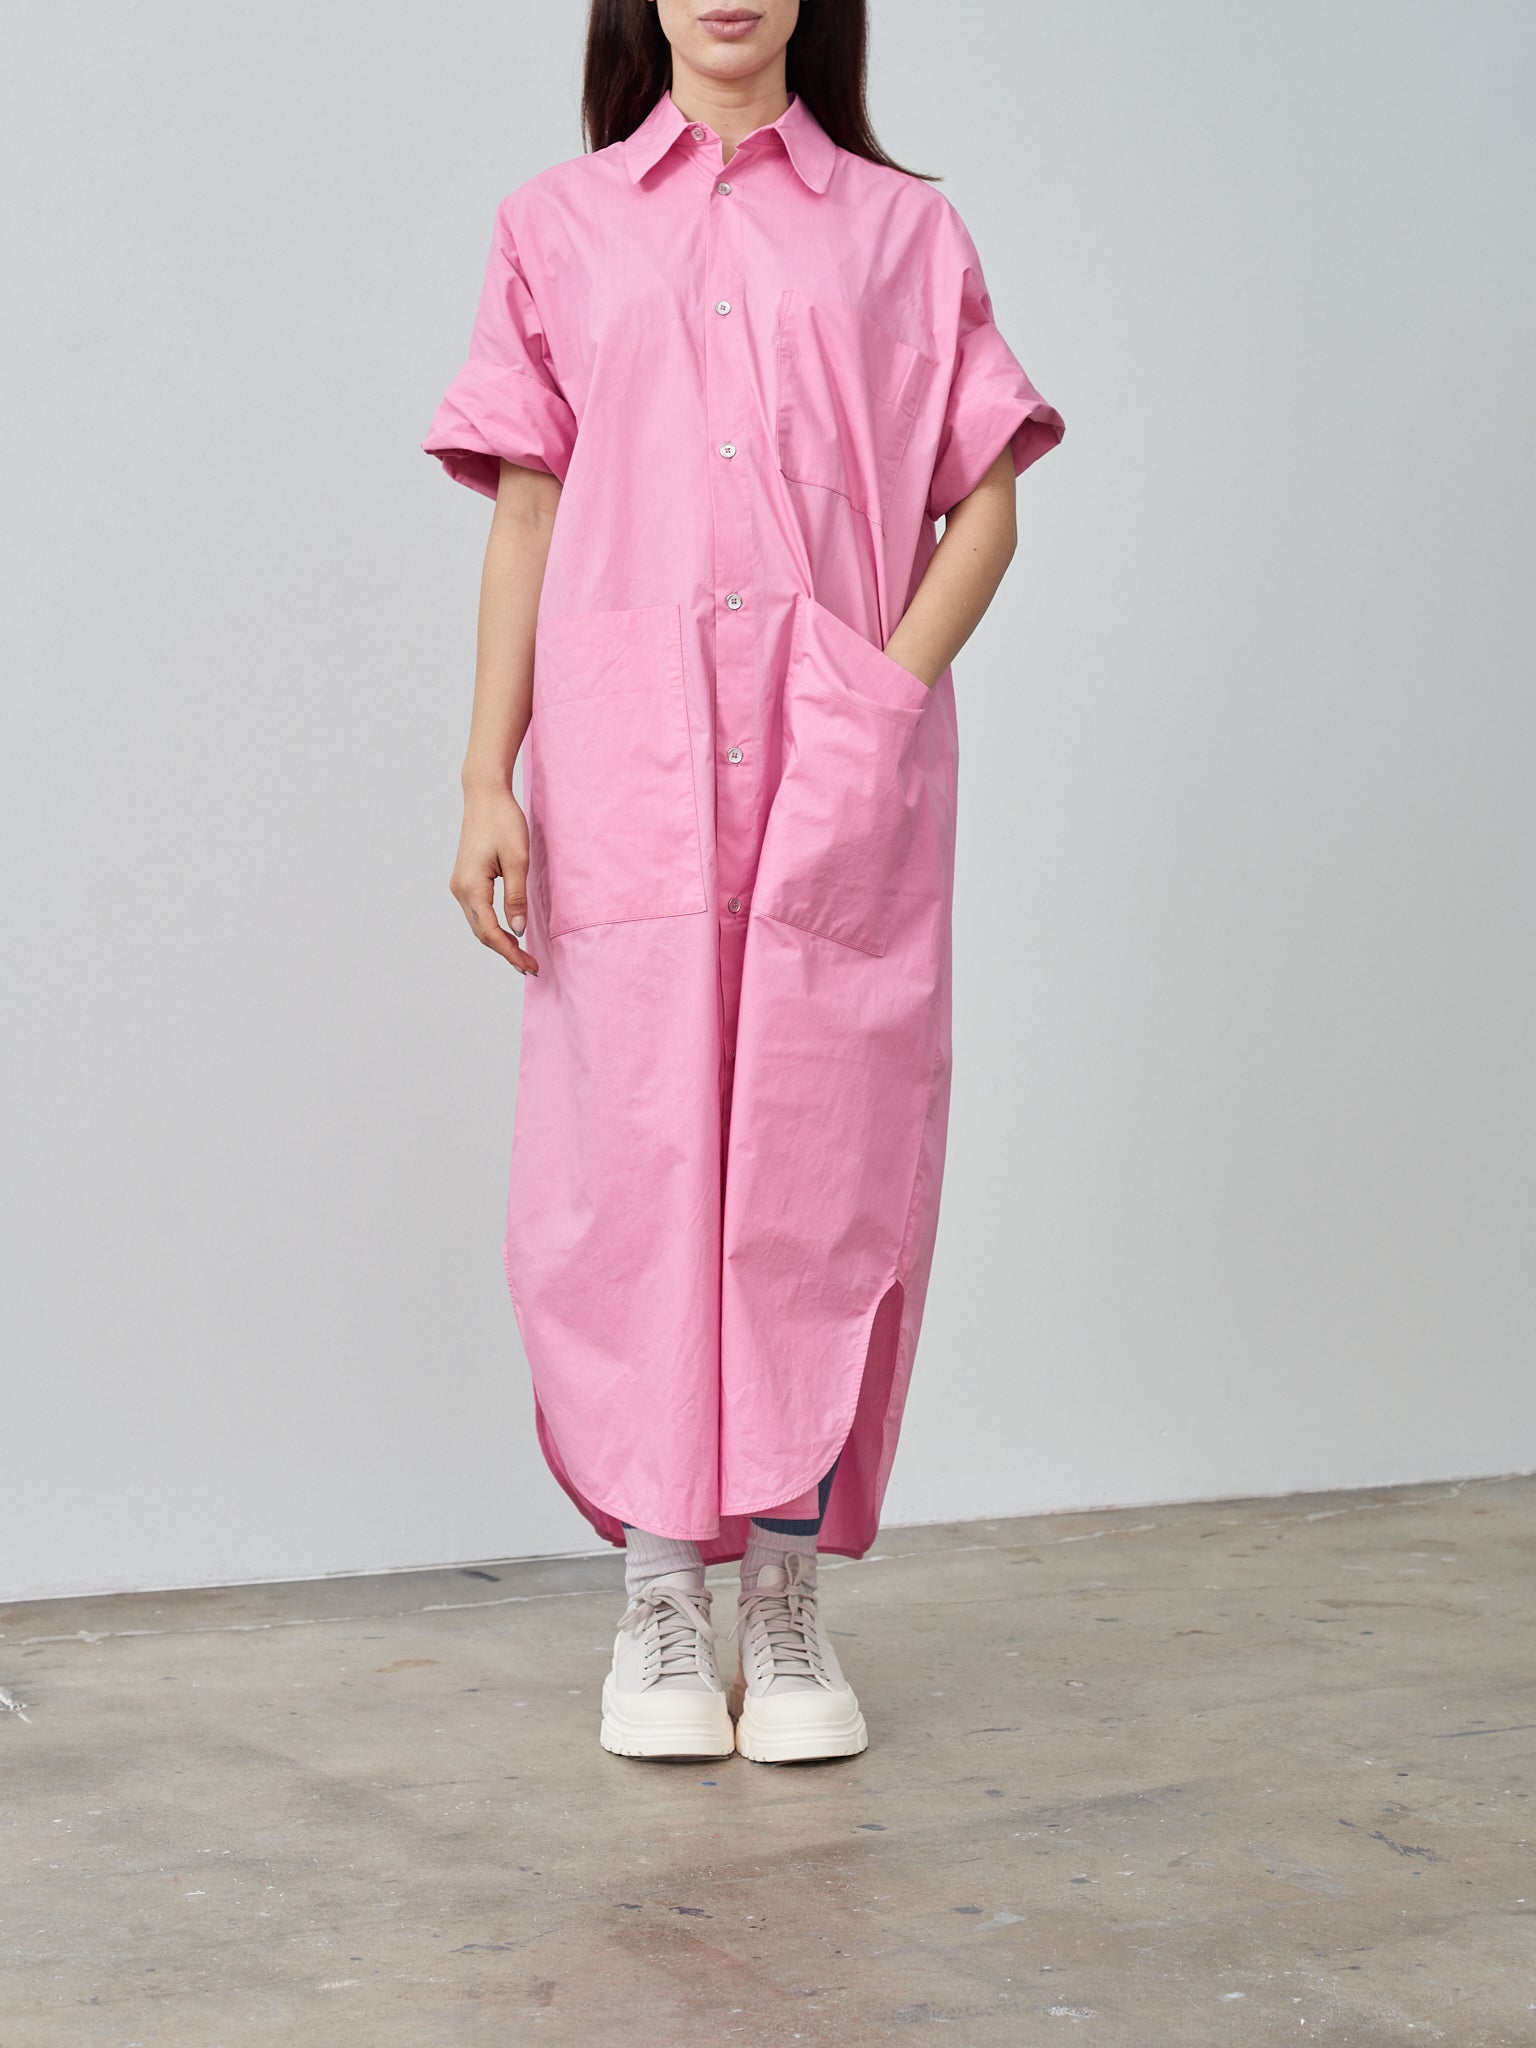 Namu Shop - Toogood The Tinker Dress - LW Textured Cotton Gum